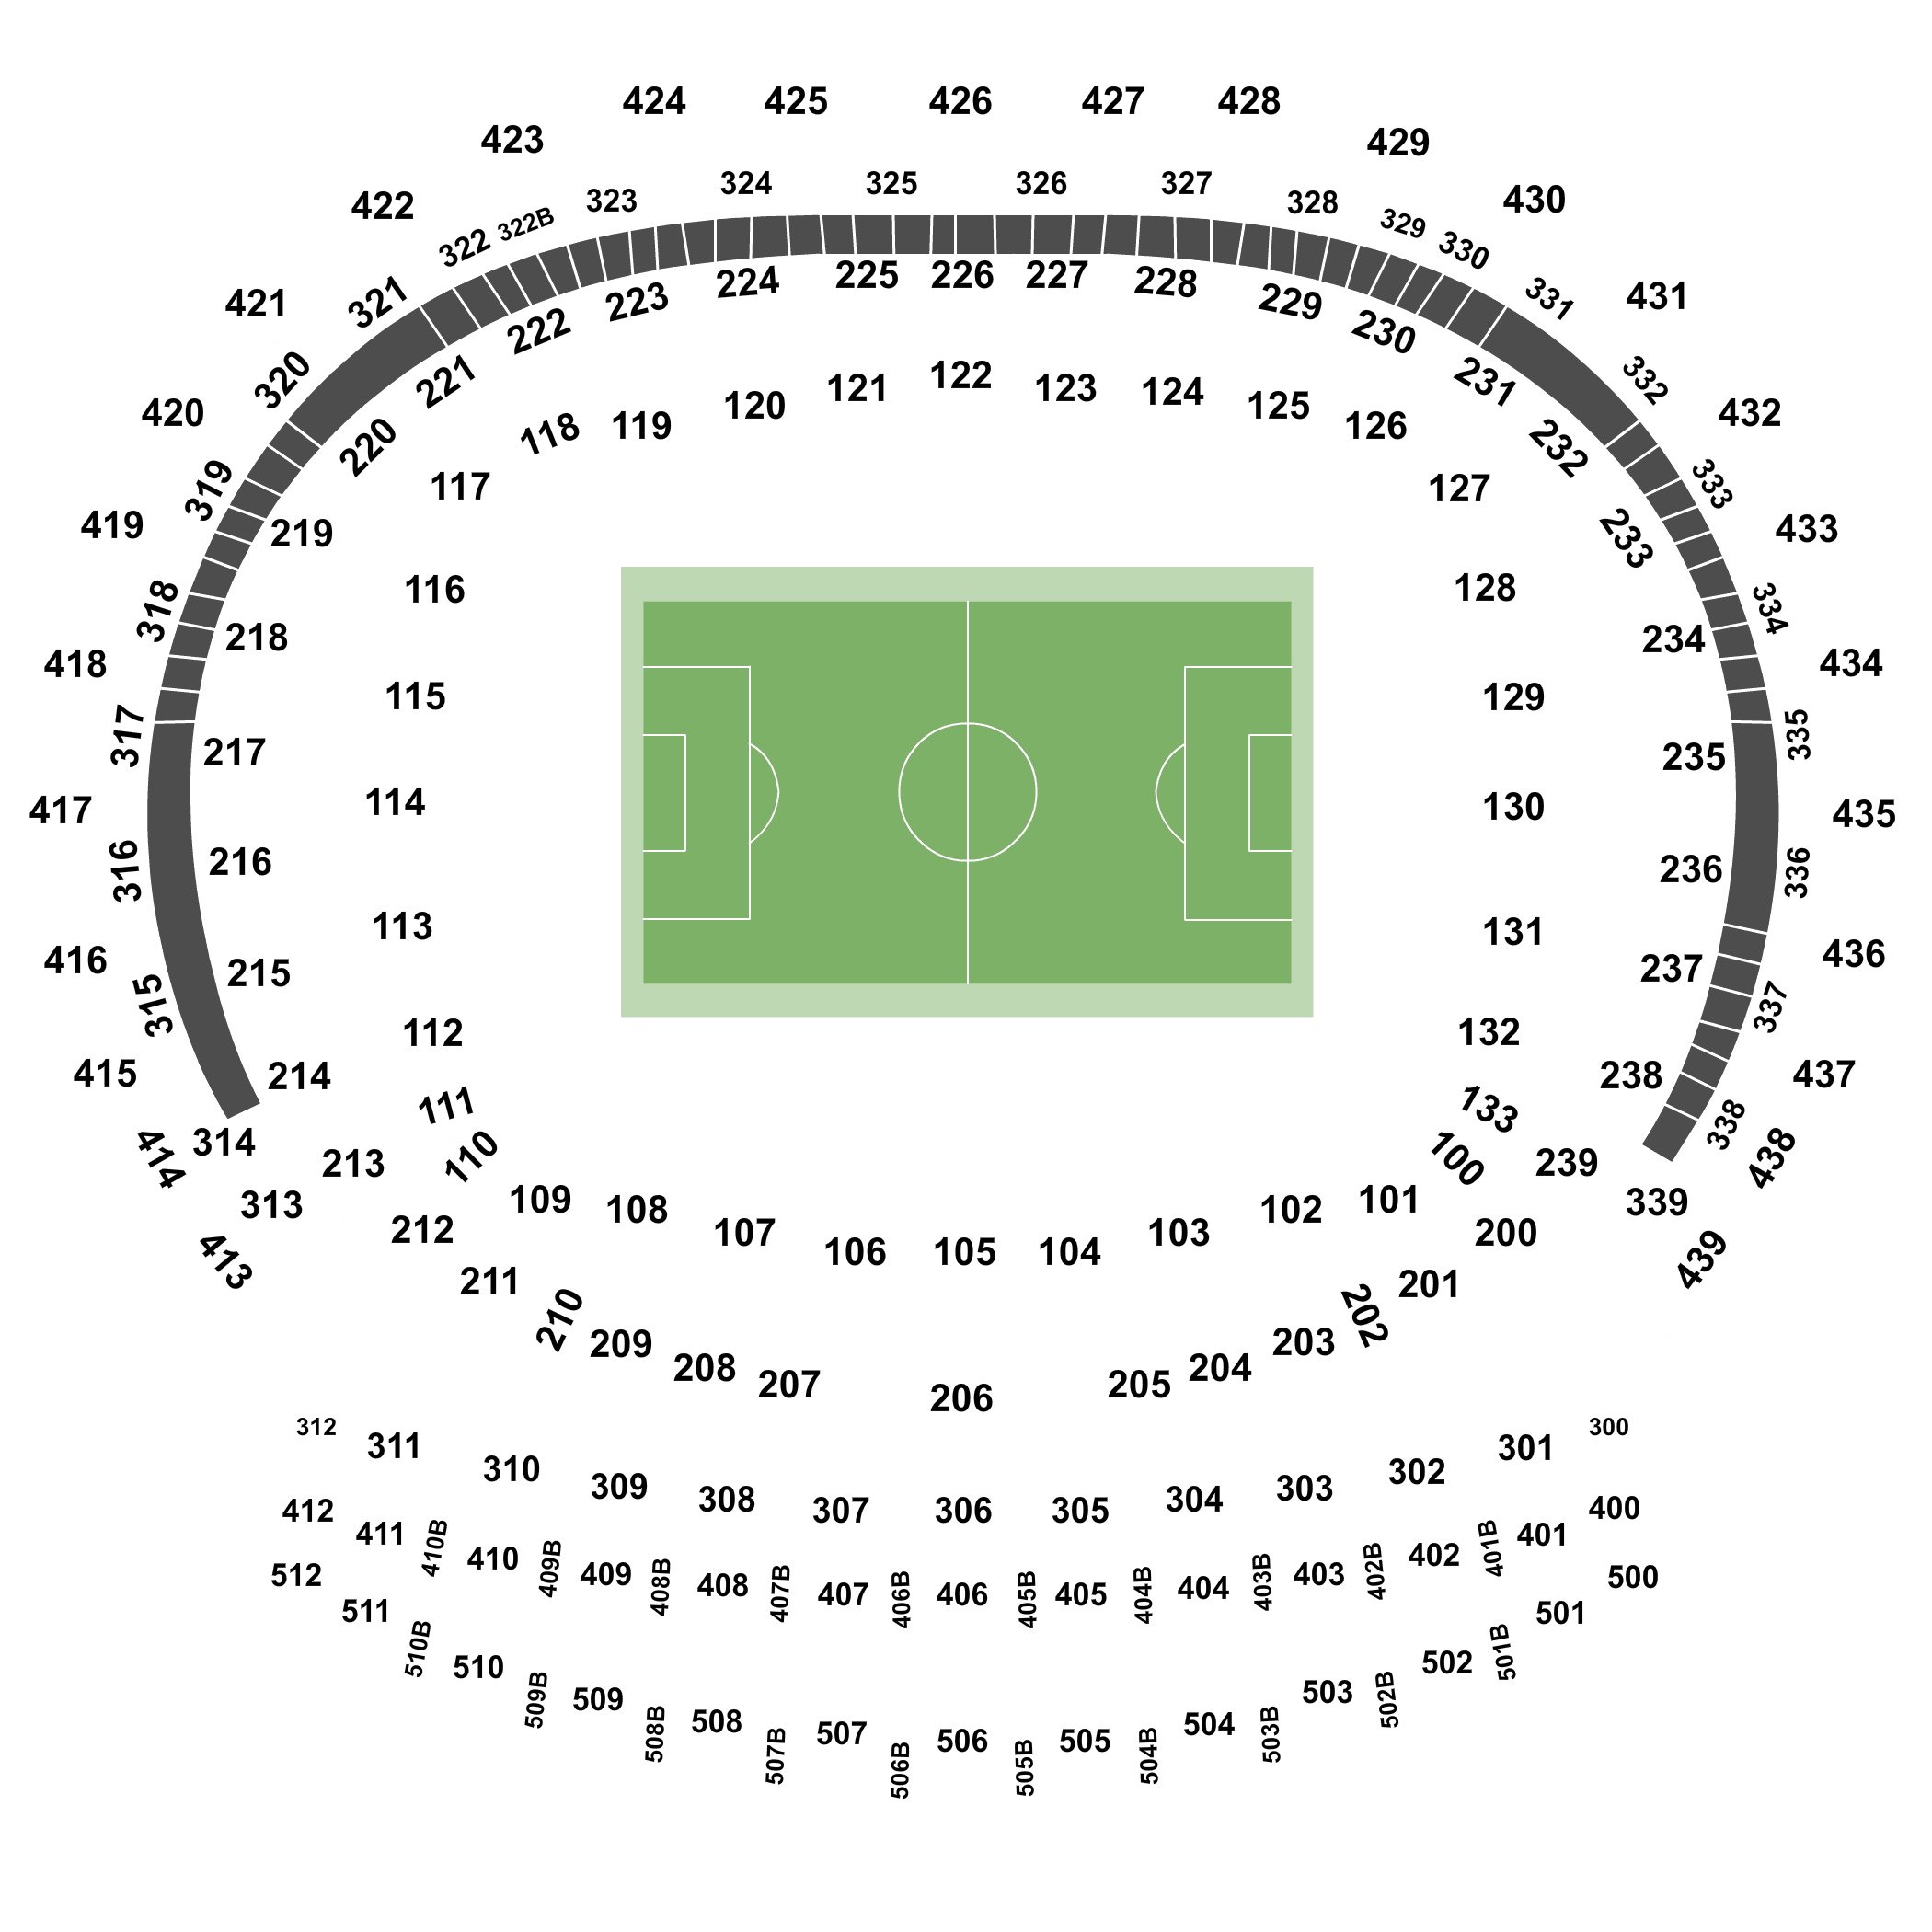 Wanda Metropolitano Seating Chart